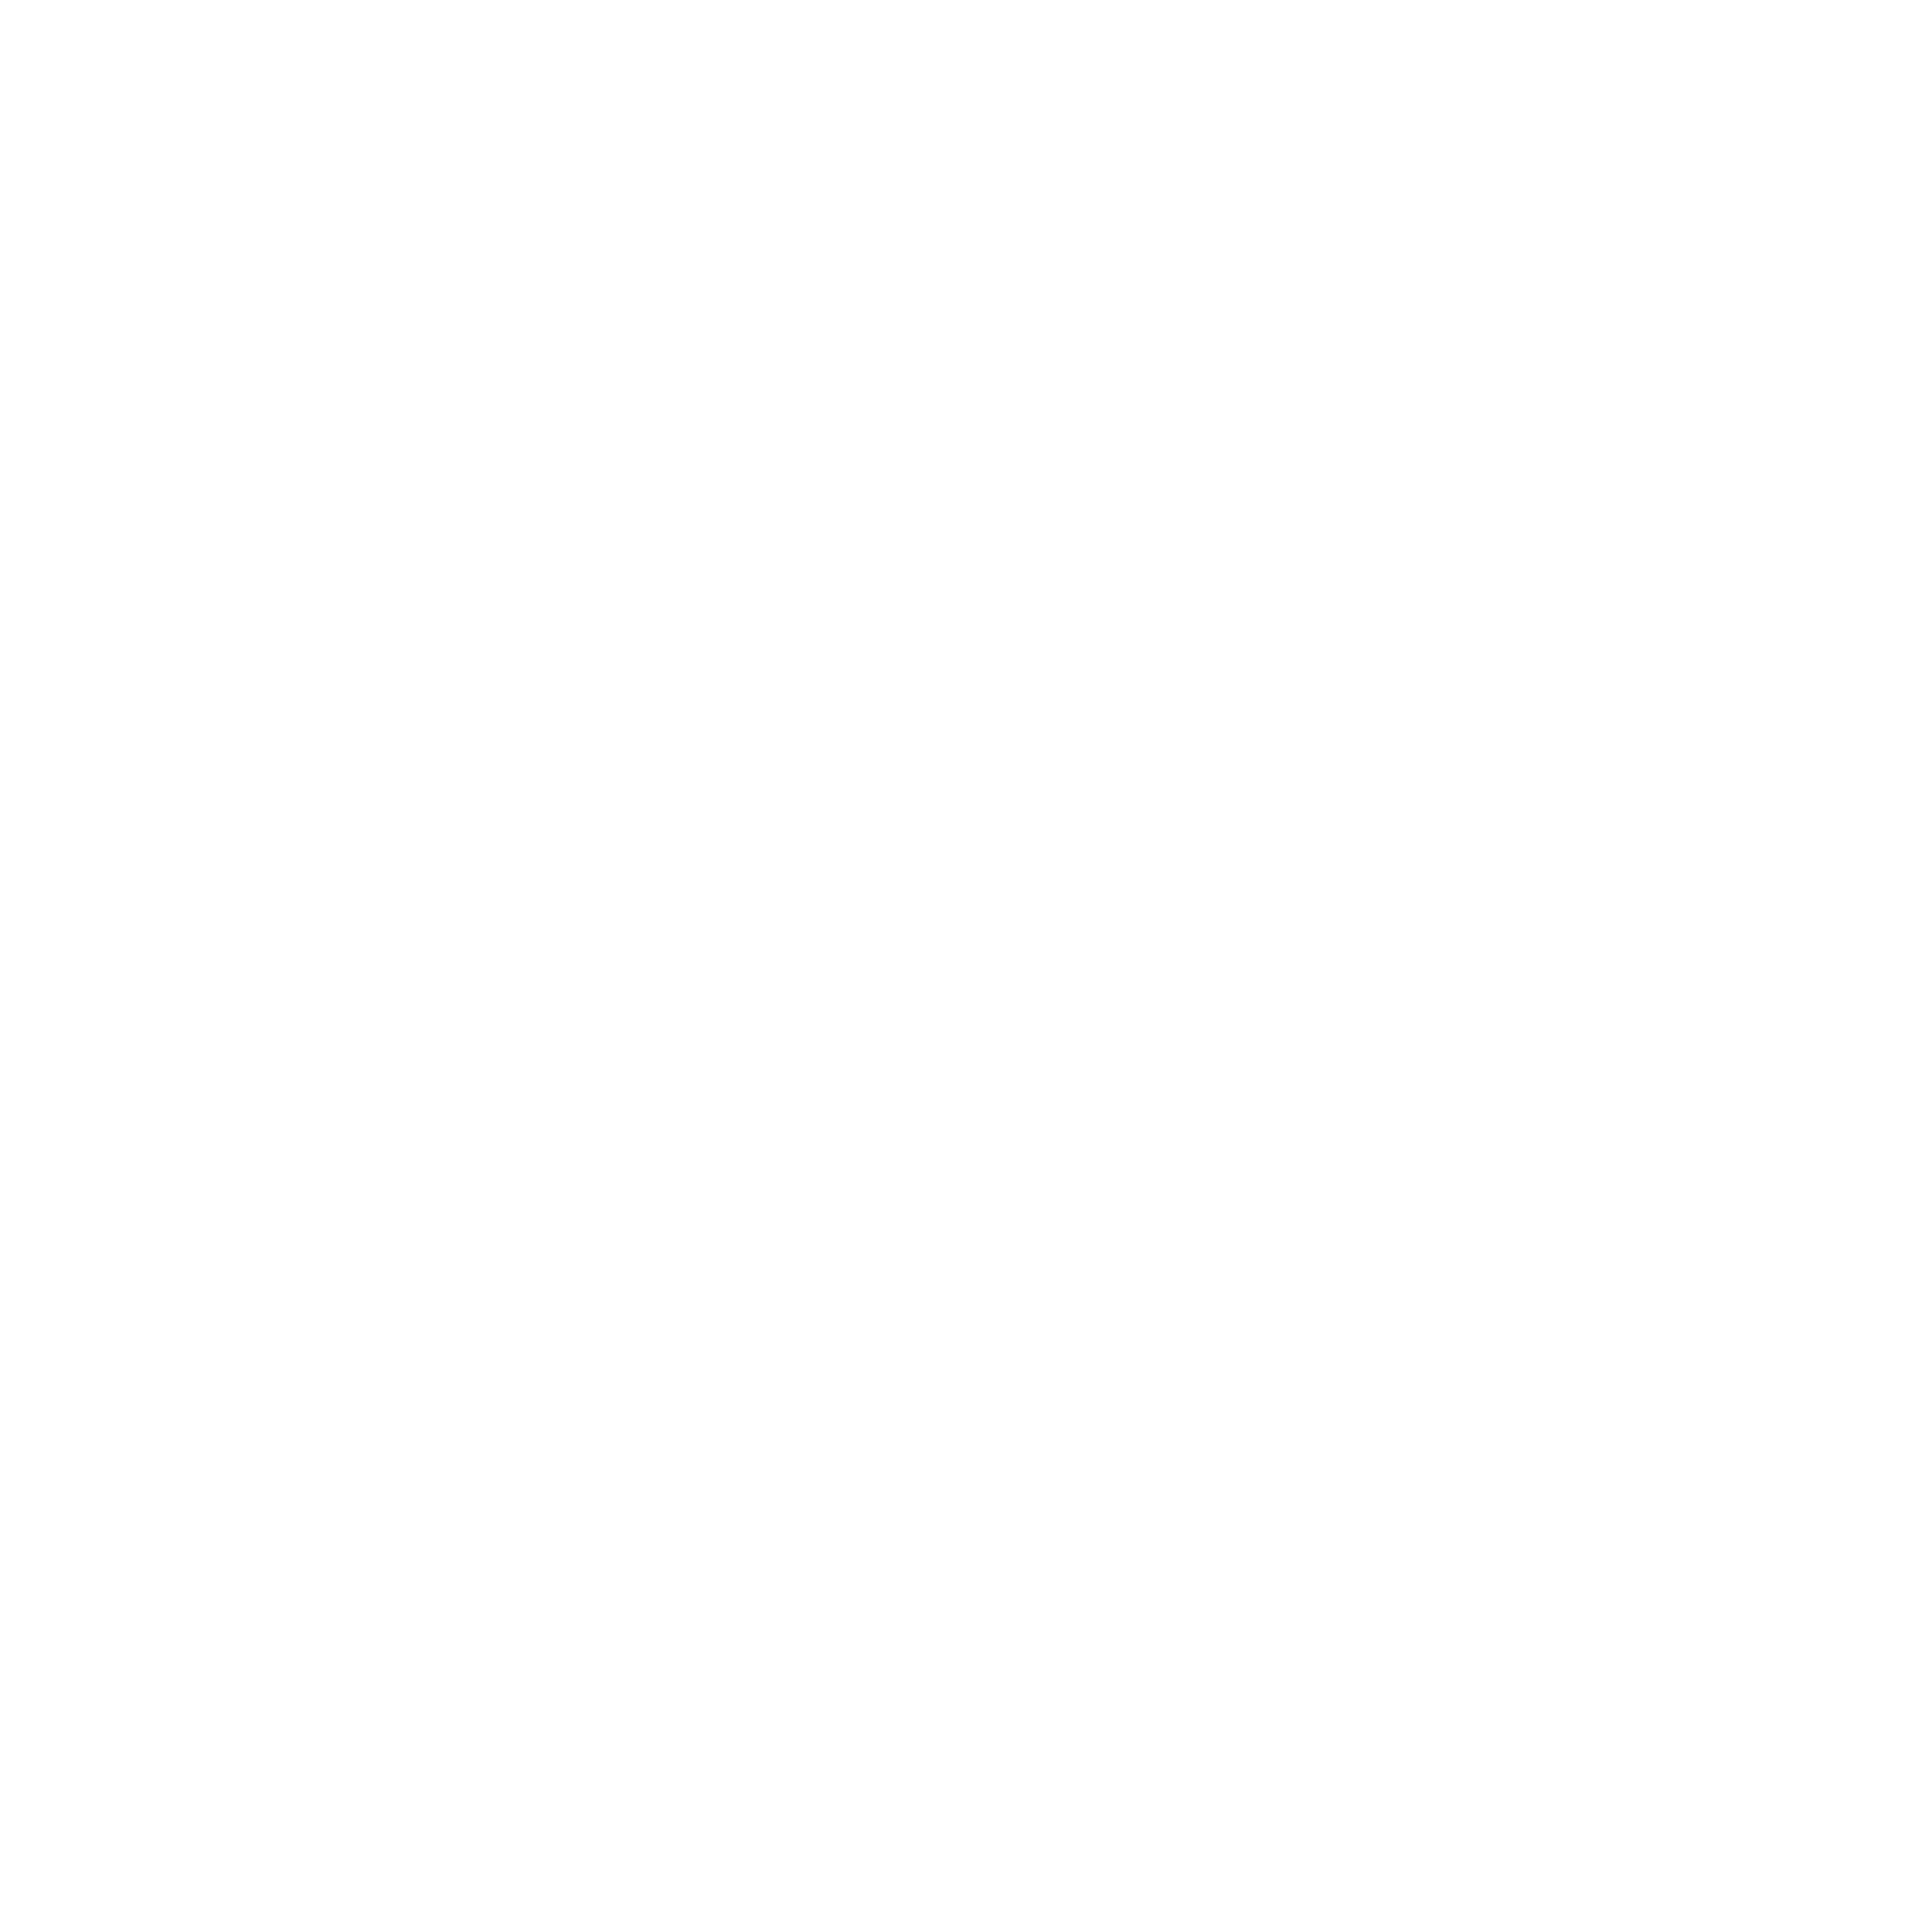 AMA FIM Final